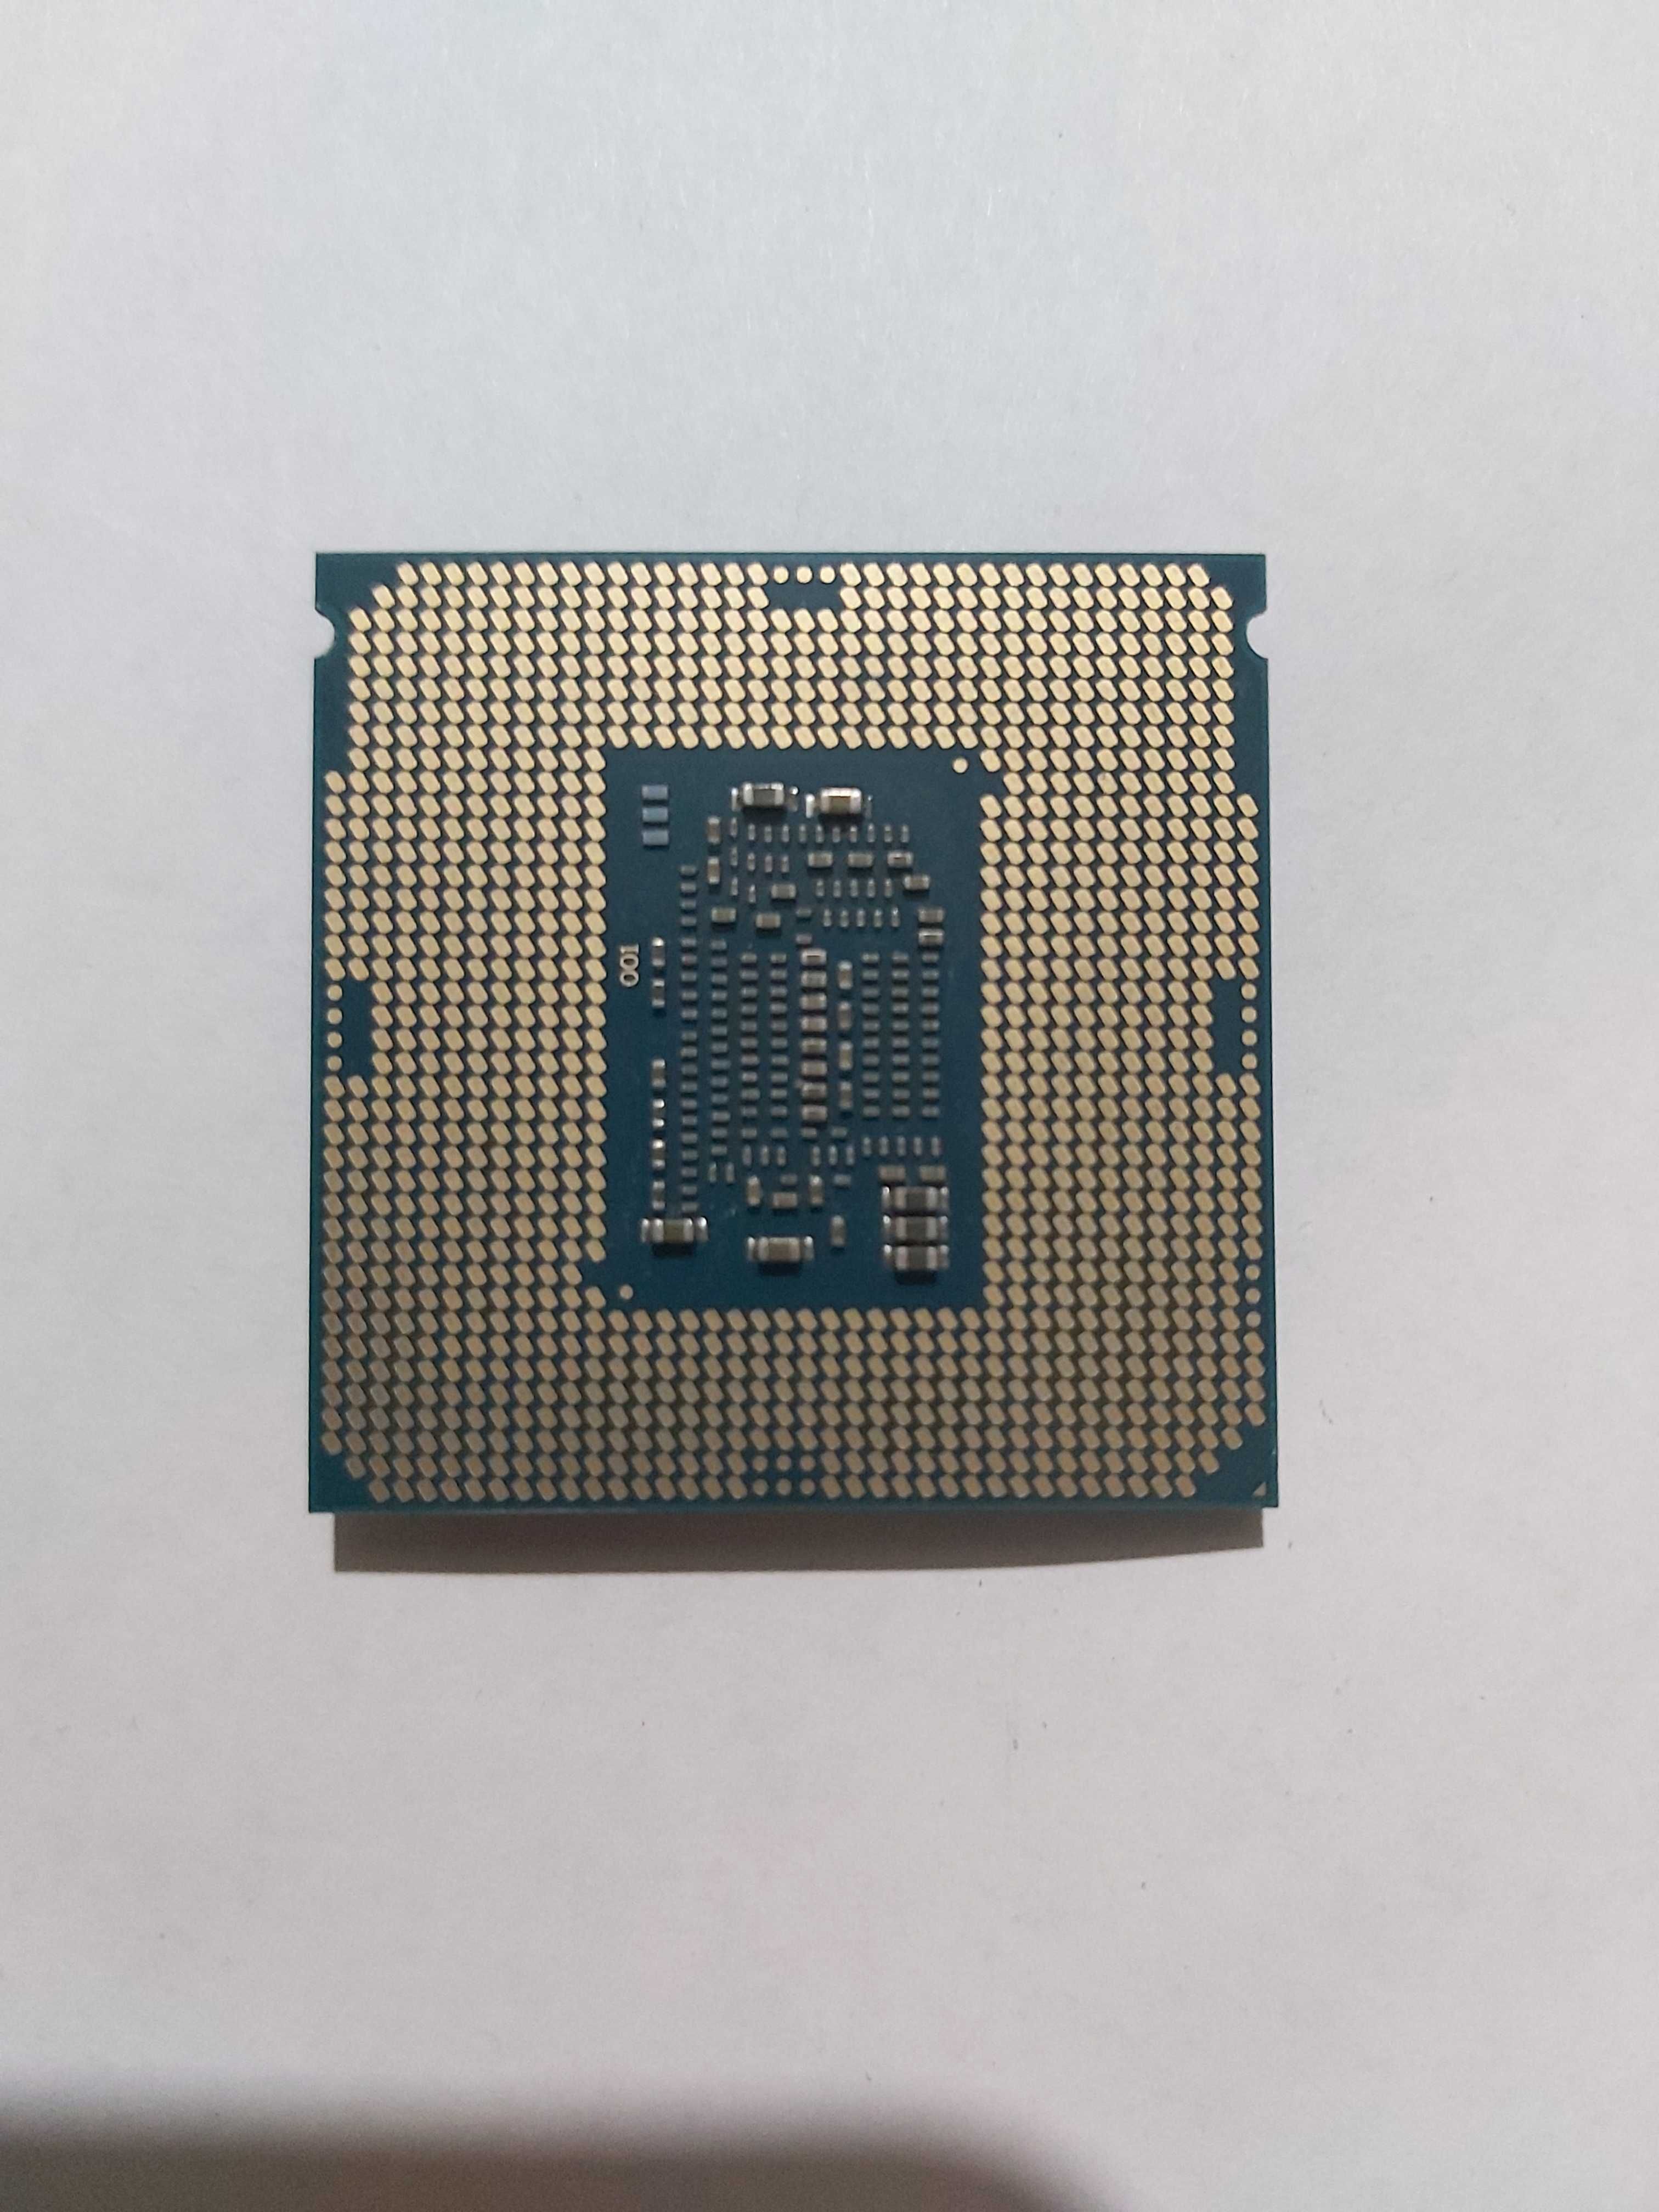 Процессор Intel® Core™ i7-7700K частота 4.2Ghz, FCLGA1151 Дам гарантию